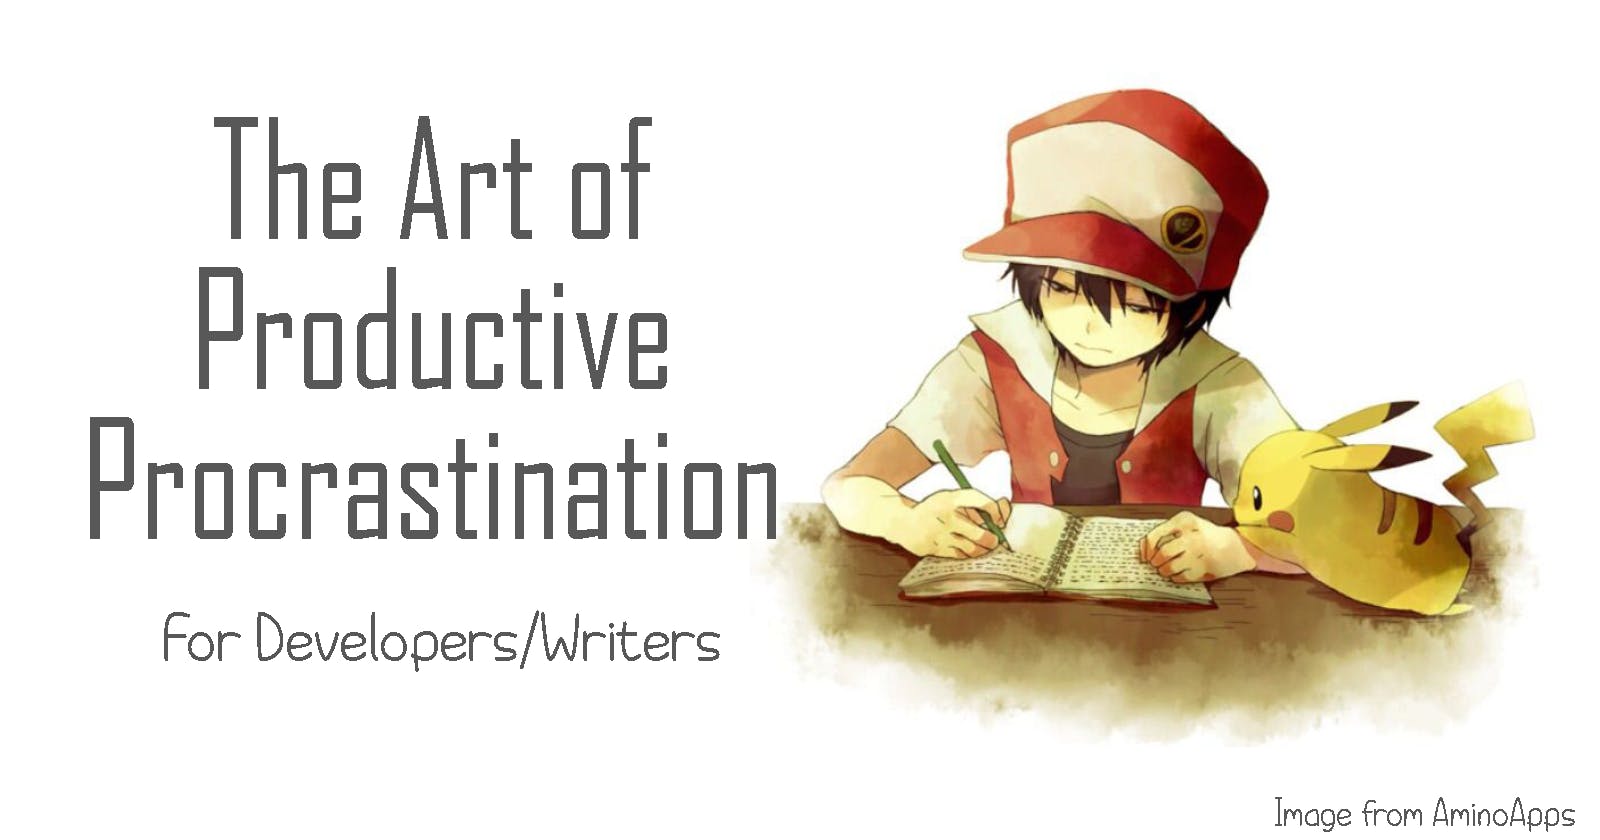 The Art of Productive Procrastination